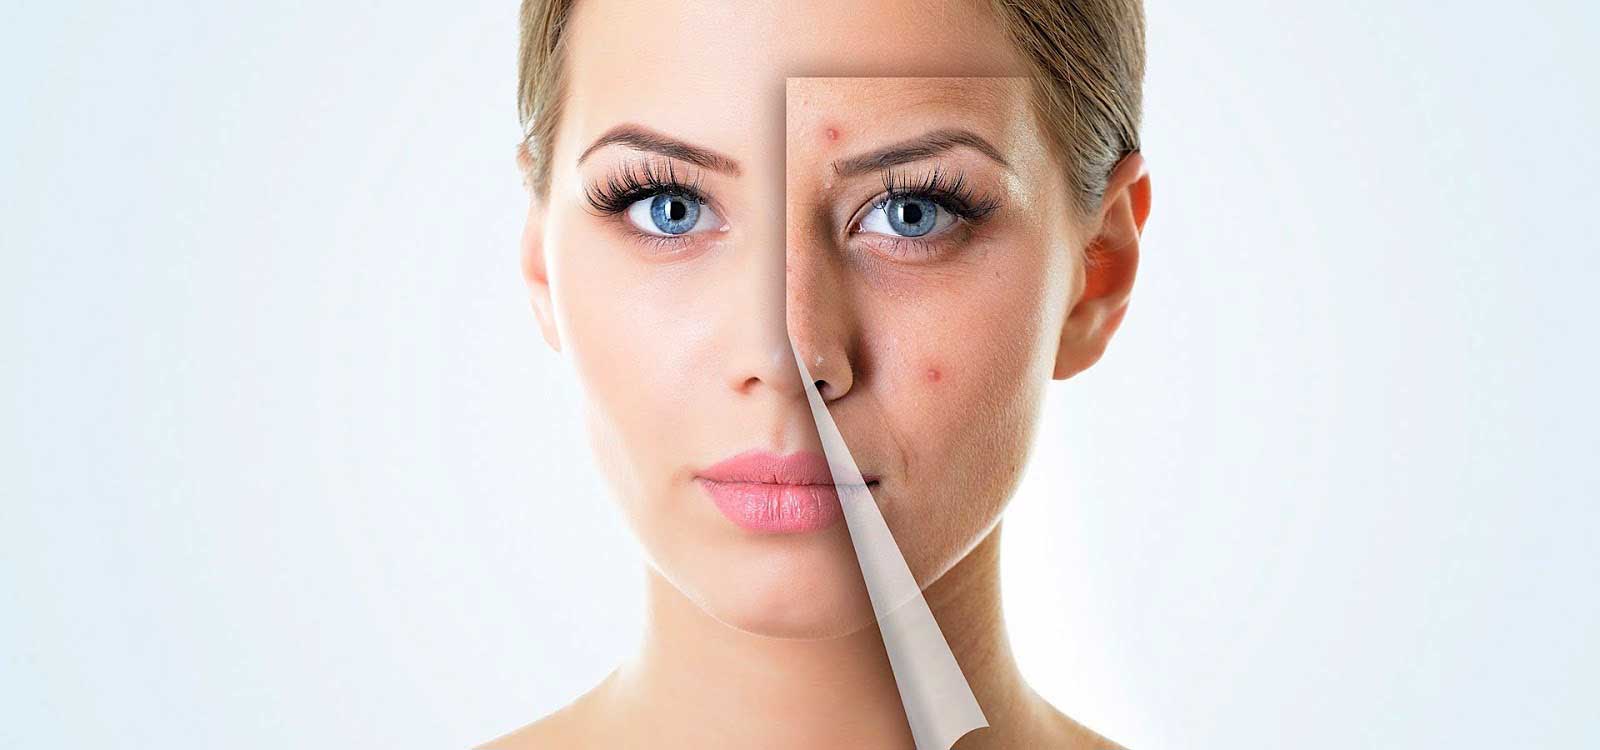 Optimal diet to get rid of acne